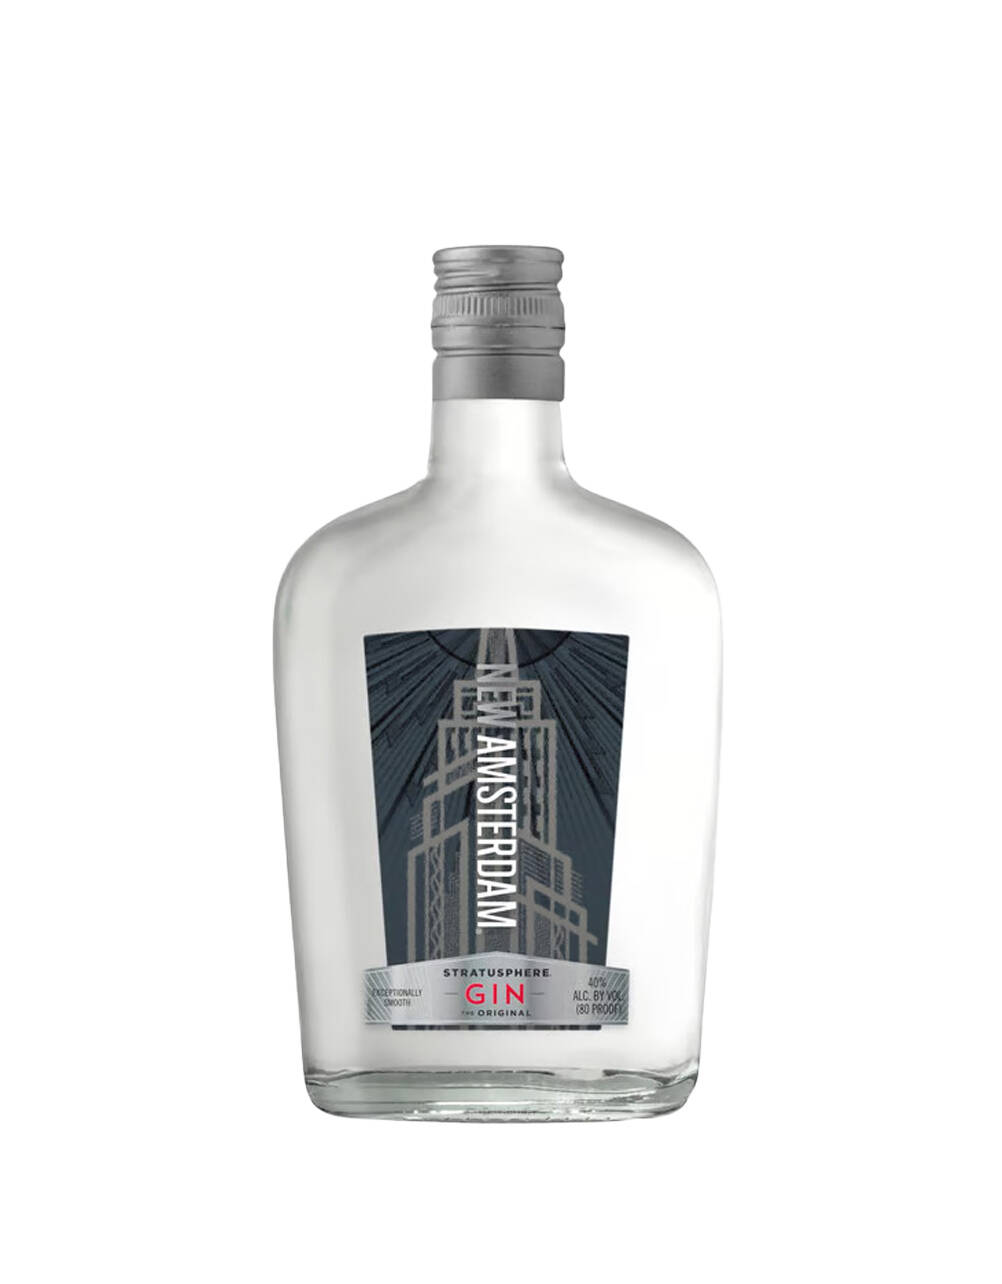 New Amsterdam Orignial Gin 375ml